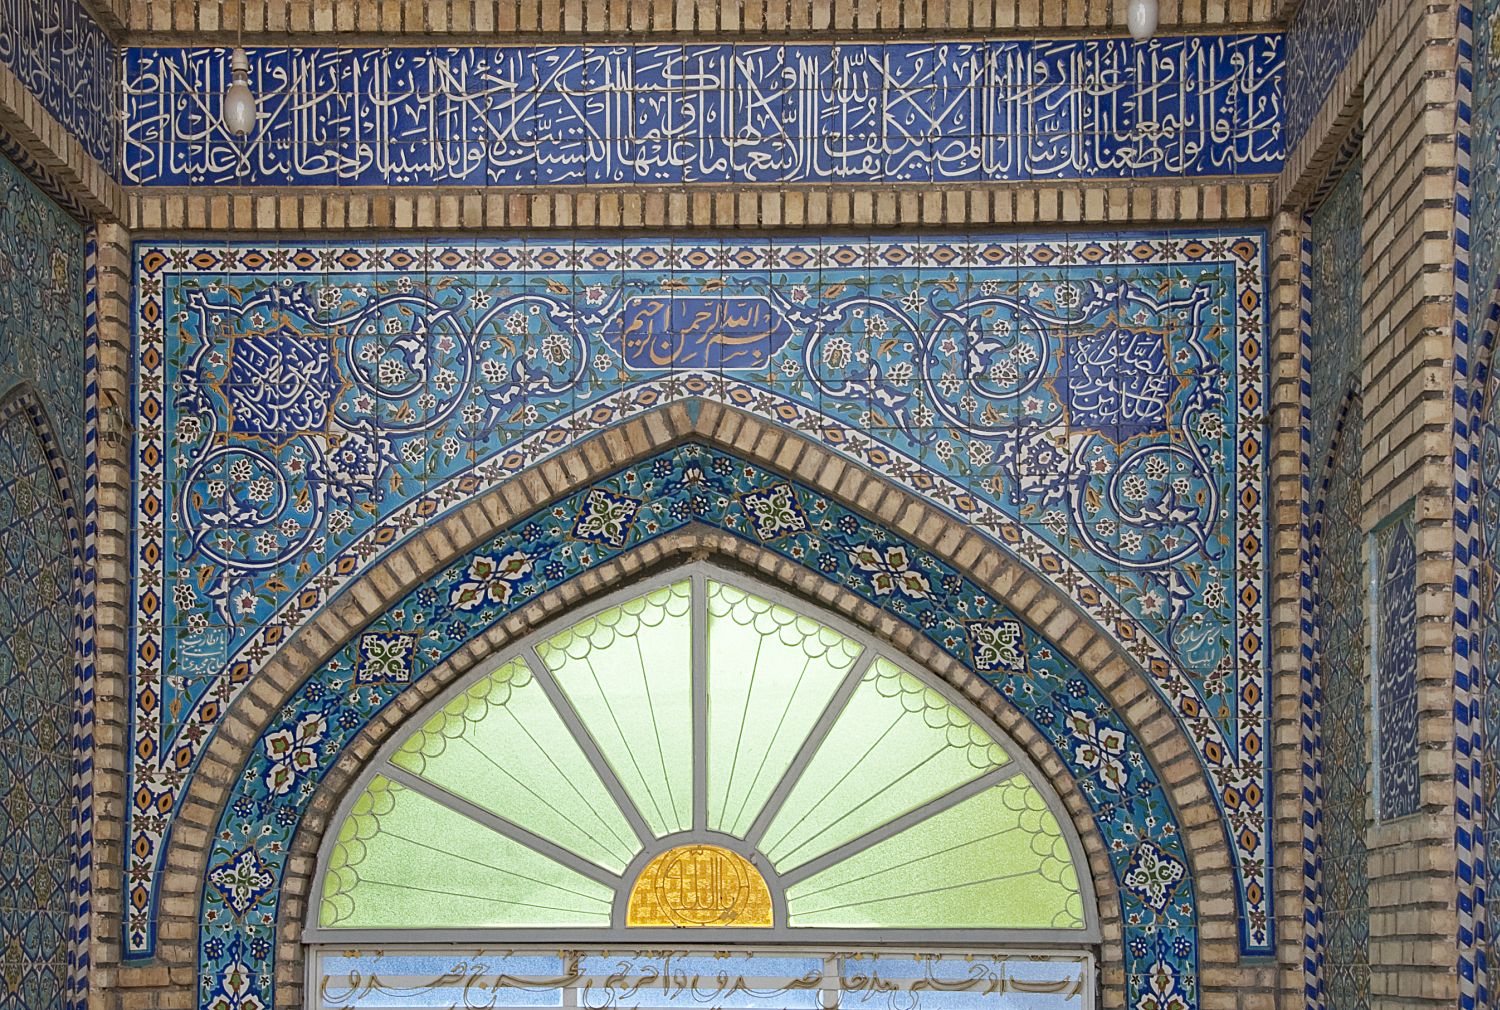 Entrance portal: view of lunette over doorway.